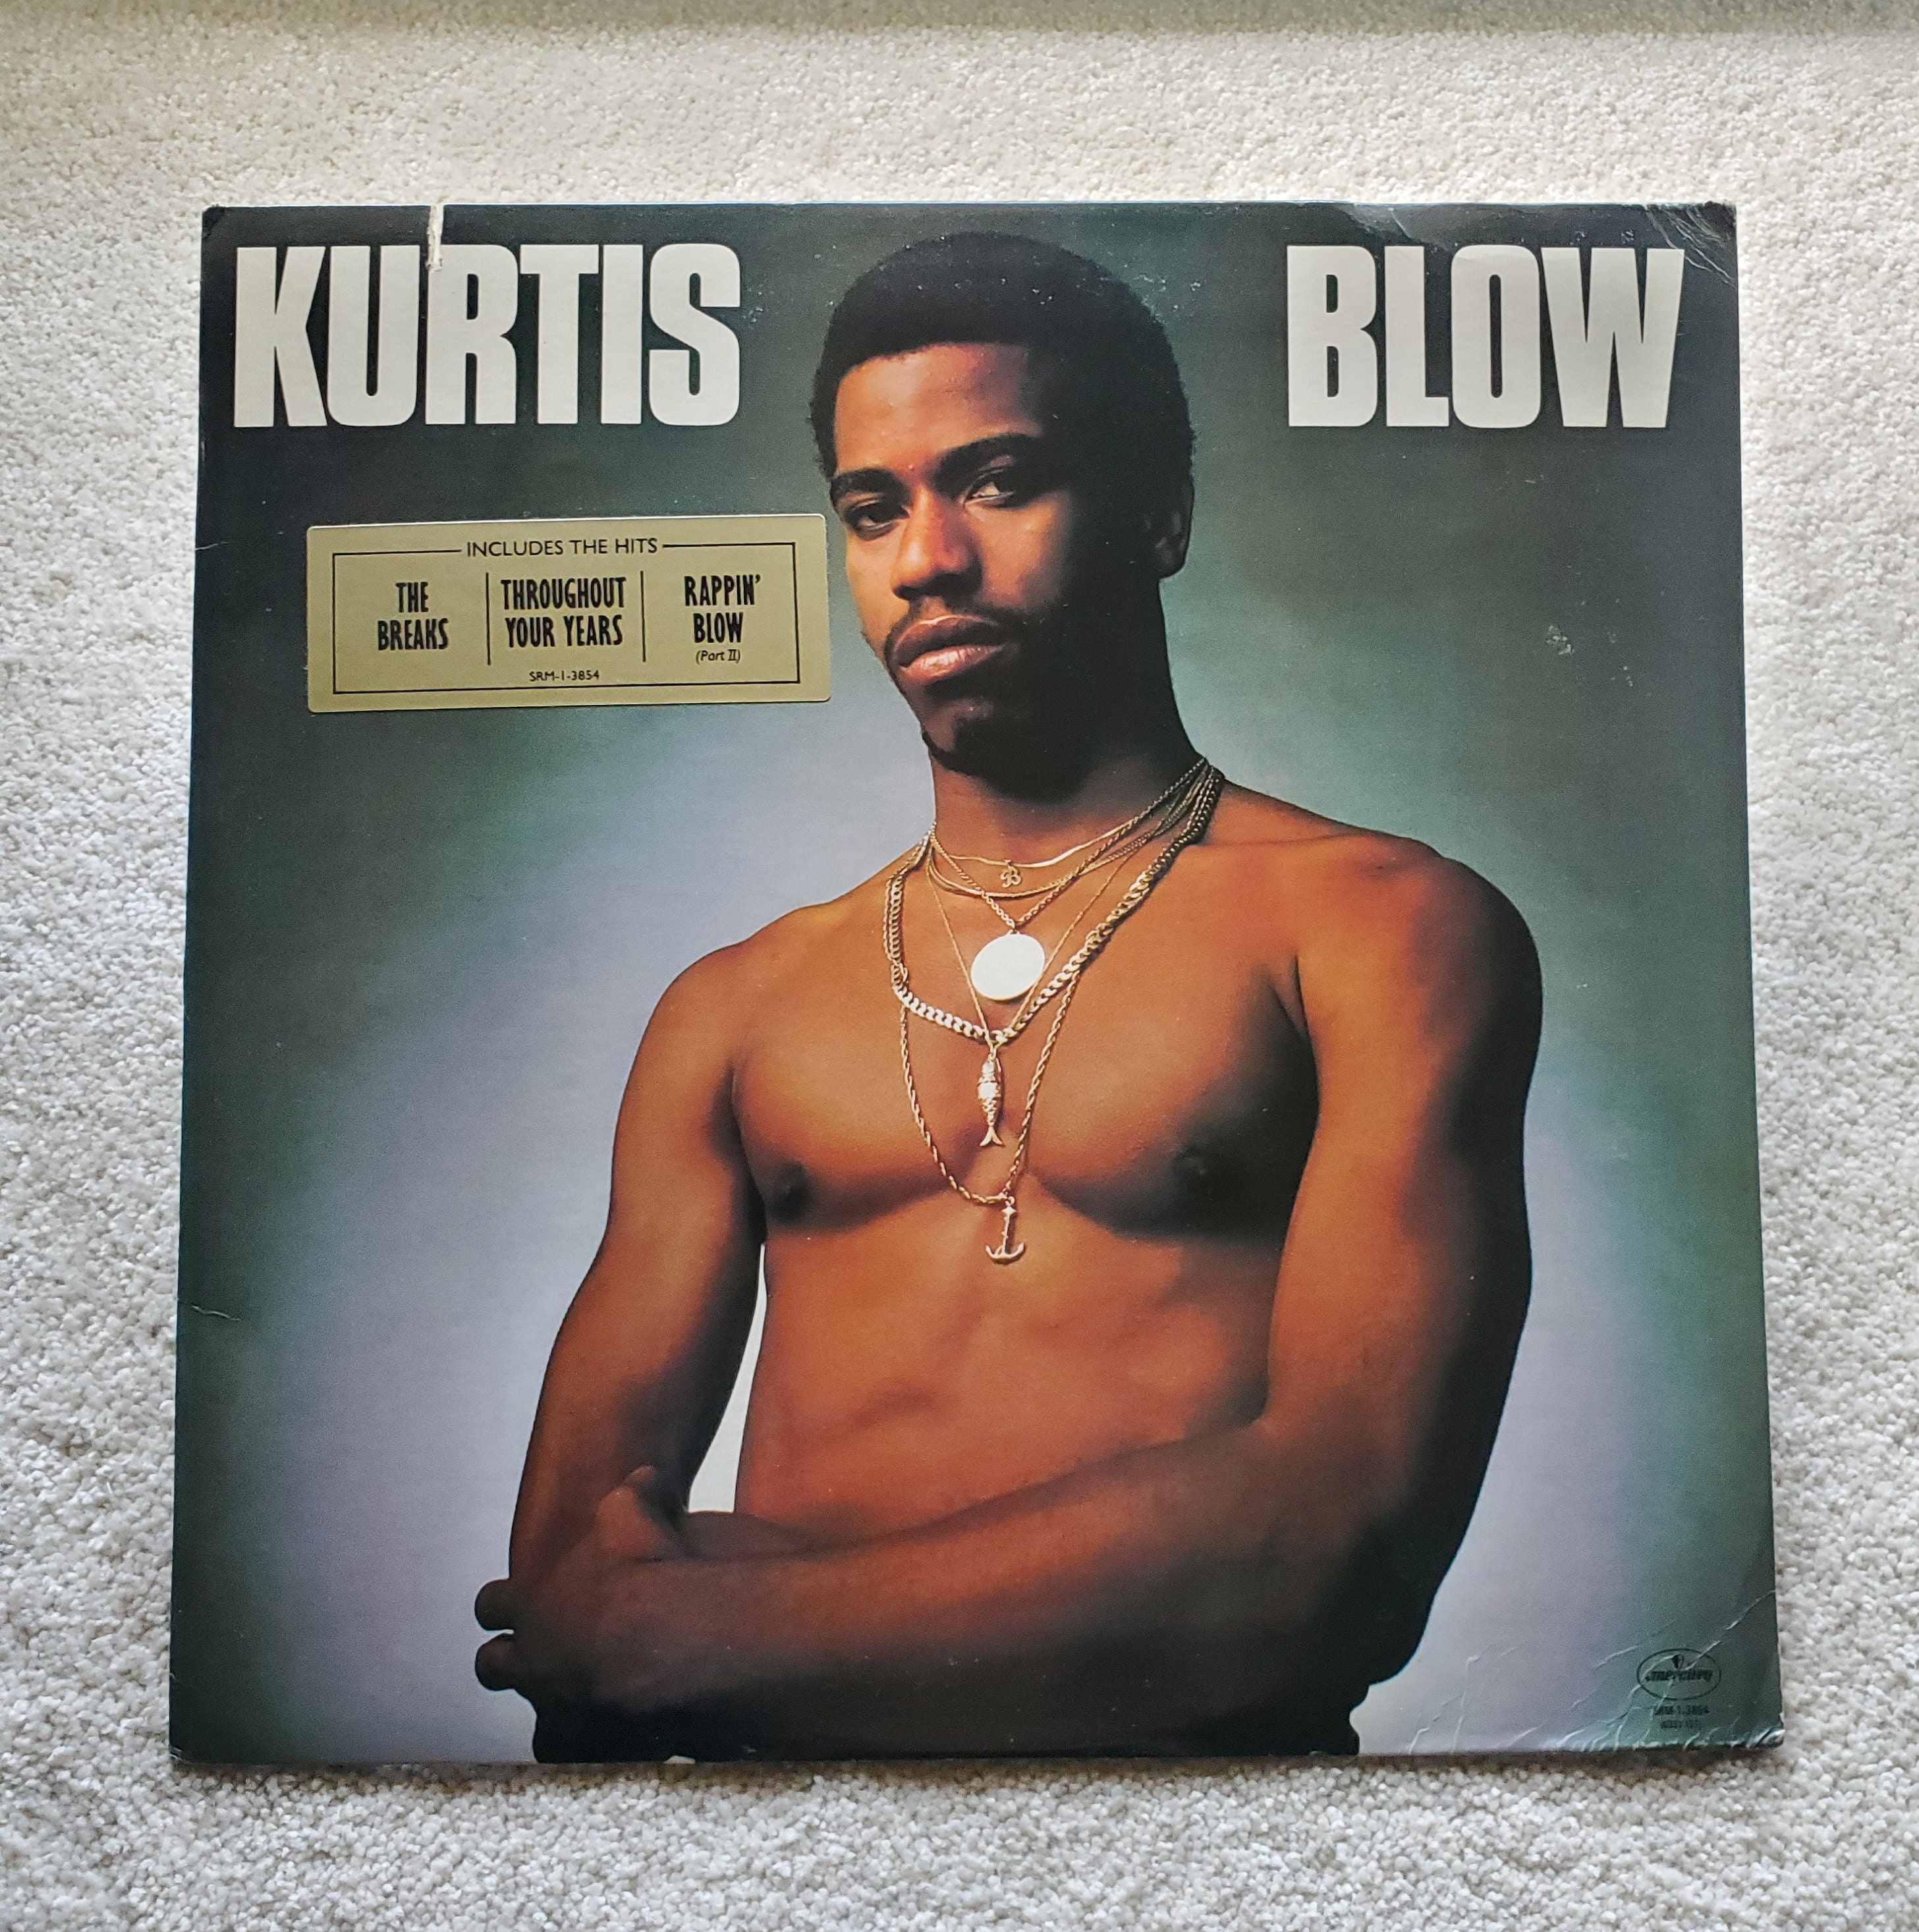 Love Don't Know Nobody - Kurtis Blow: Song Lyrics, Music Videos & Concerts